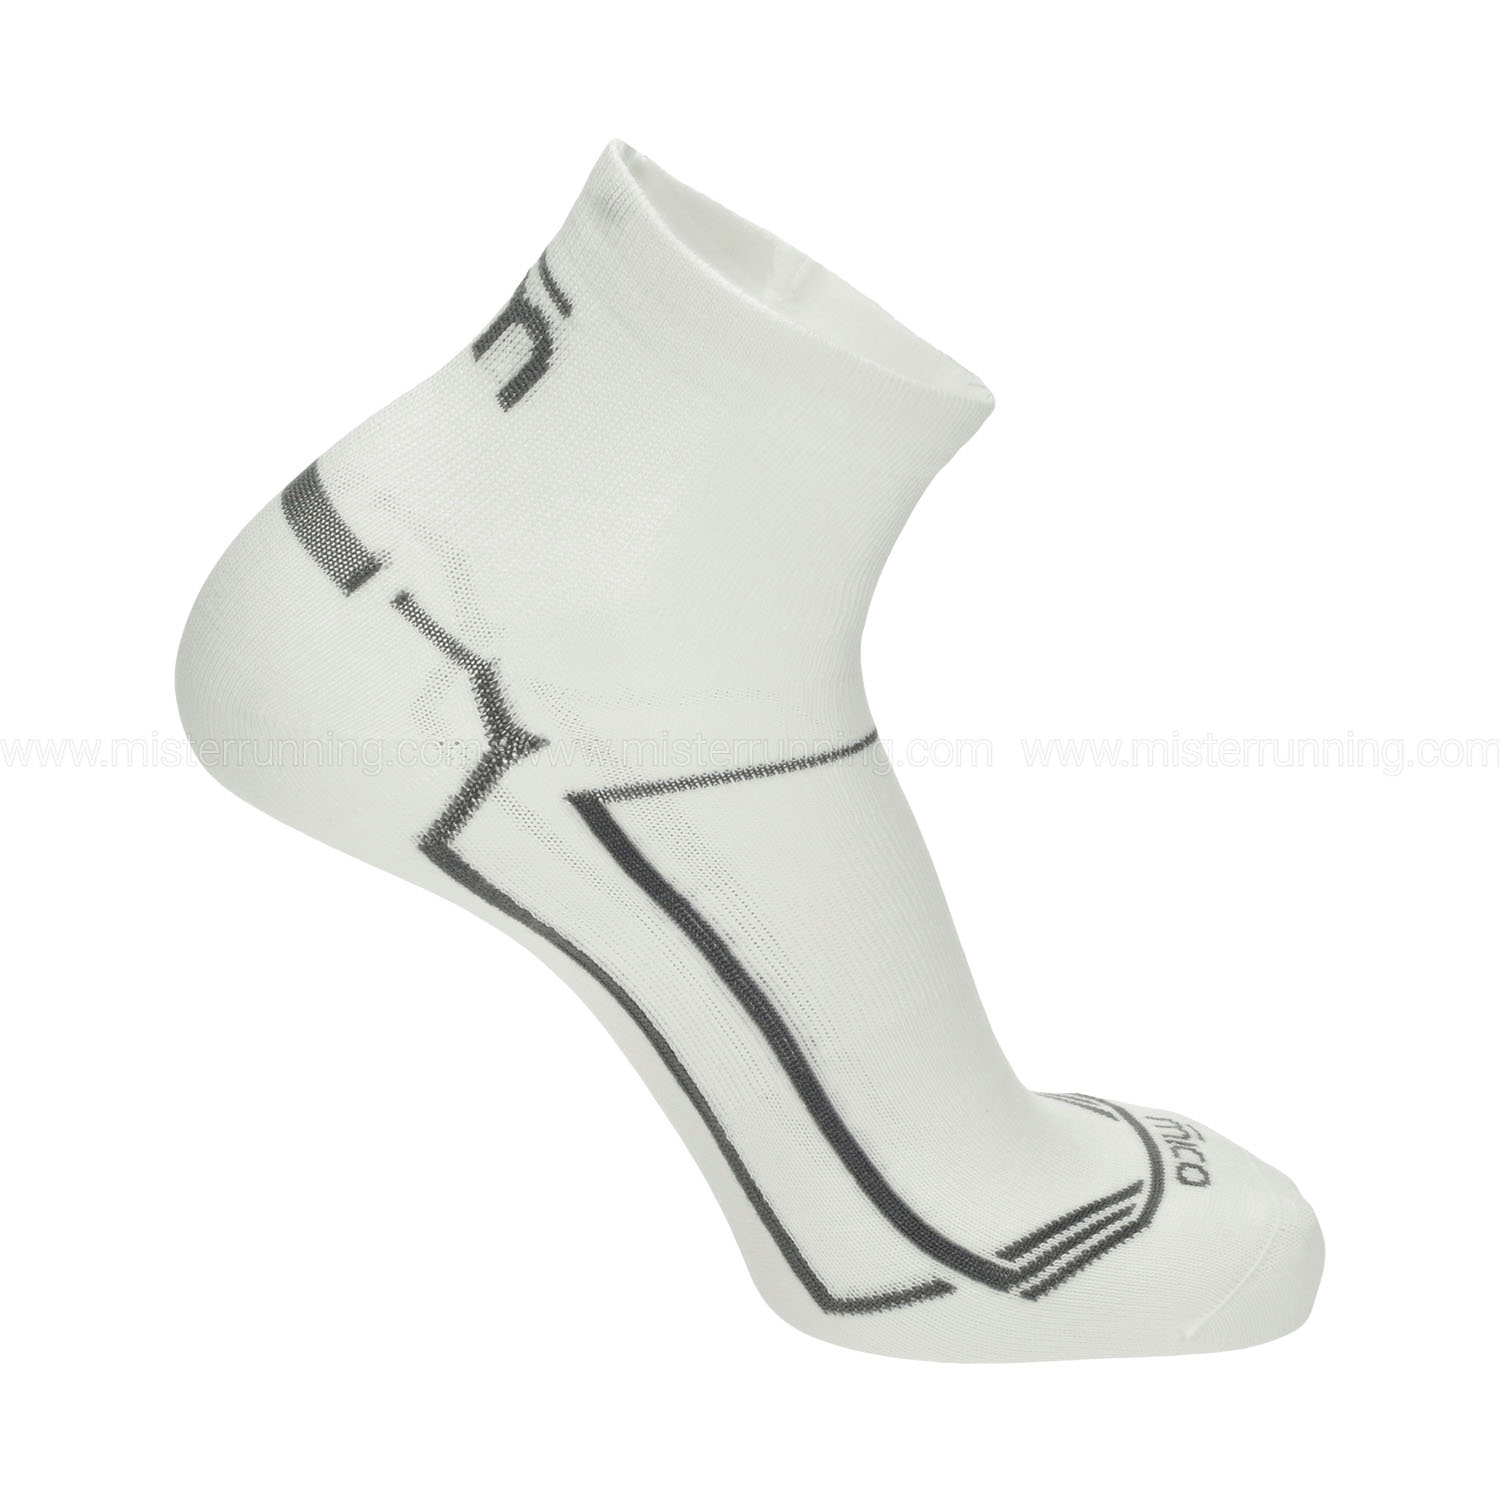 Mico Odor Zero Outlast Light Weight Socks - Bianco